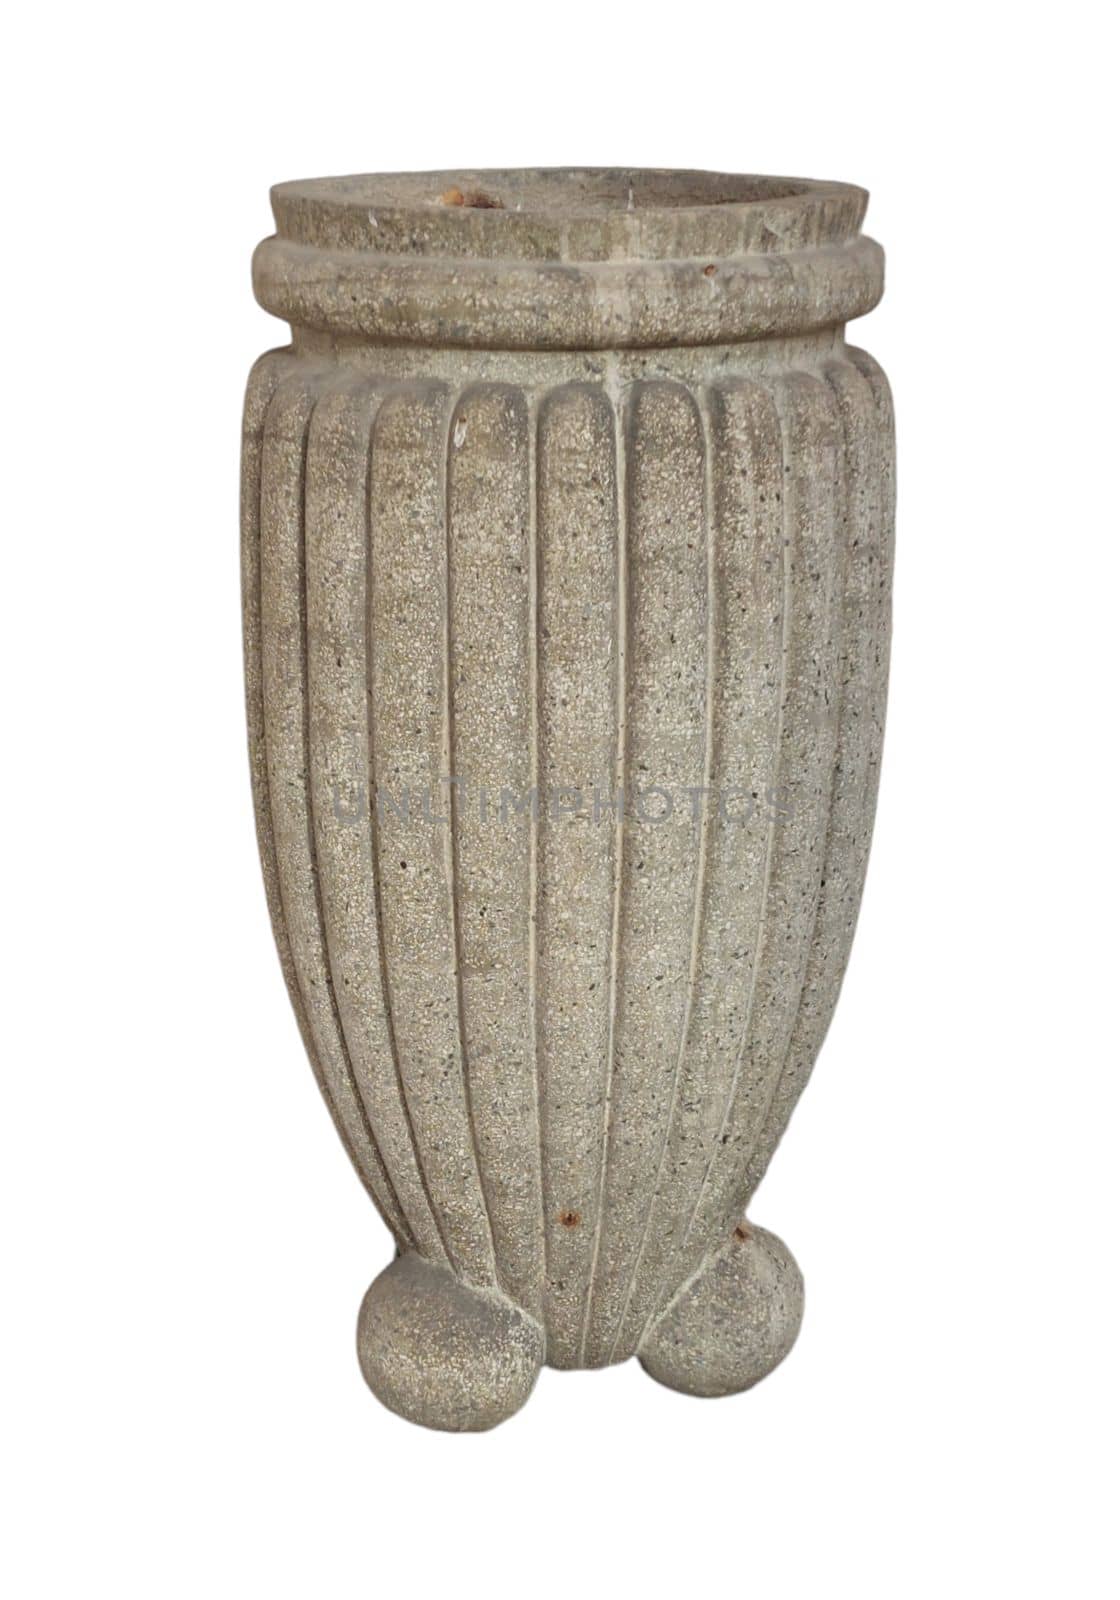 Weathered medieval stone vase on white isolated background. by gallofoto